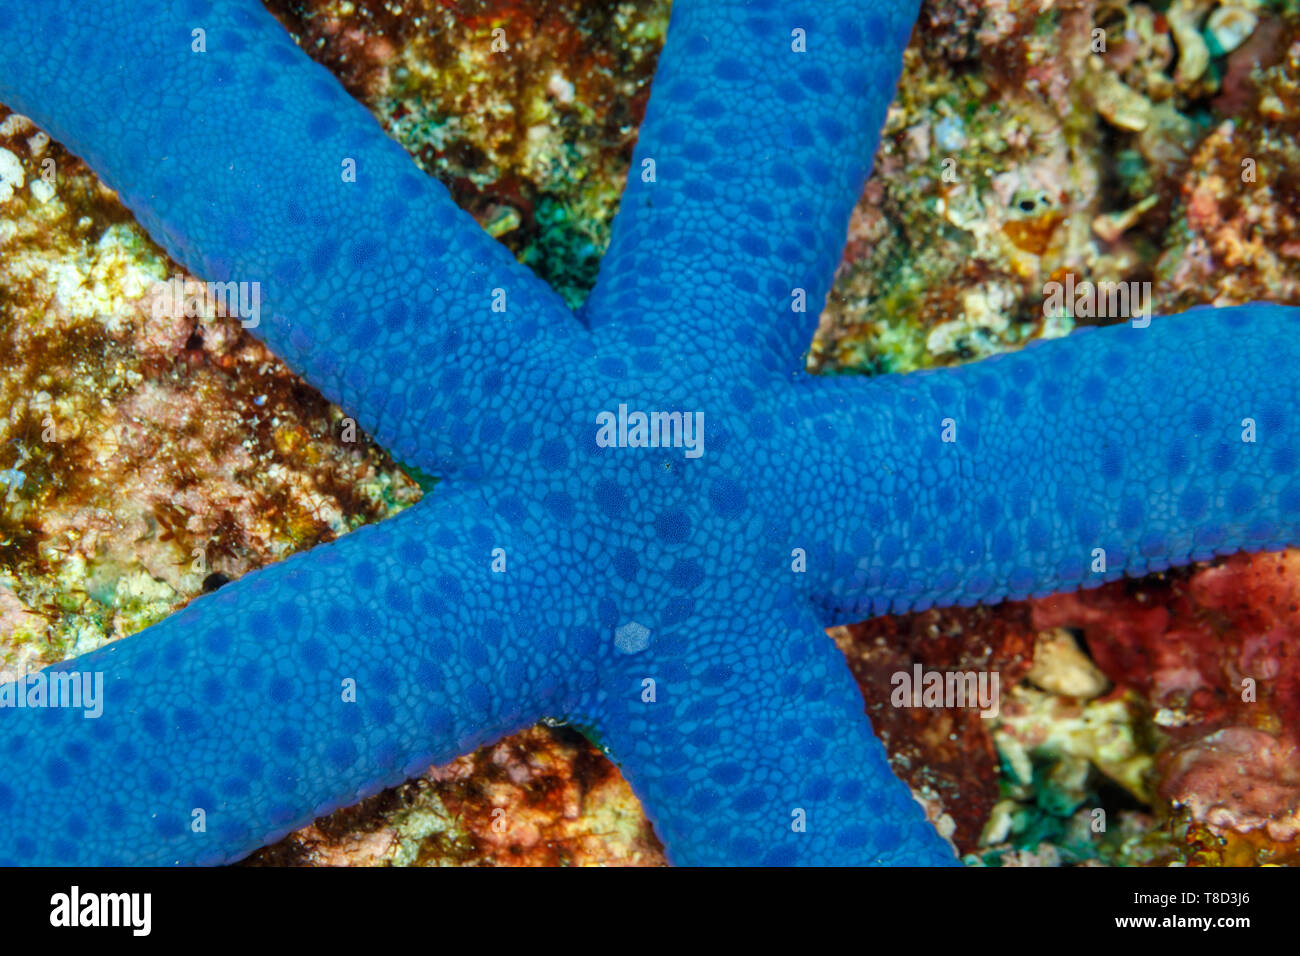 Close up of center of a turquoise  Blue sea star Linckia laevigata Stock Photo